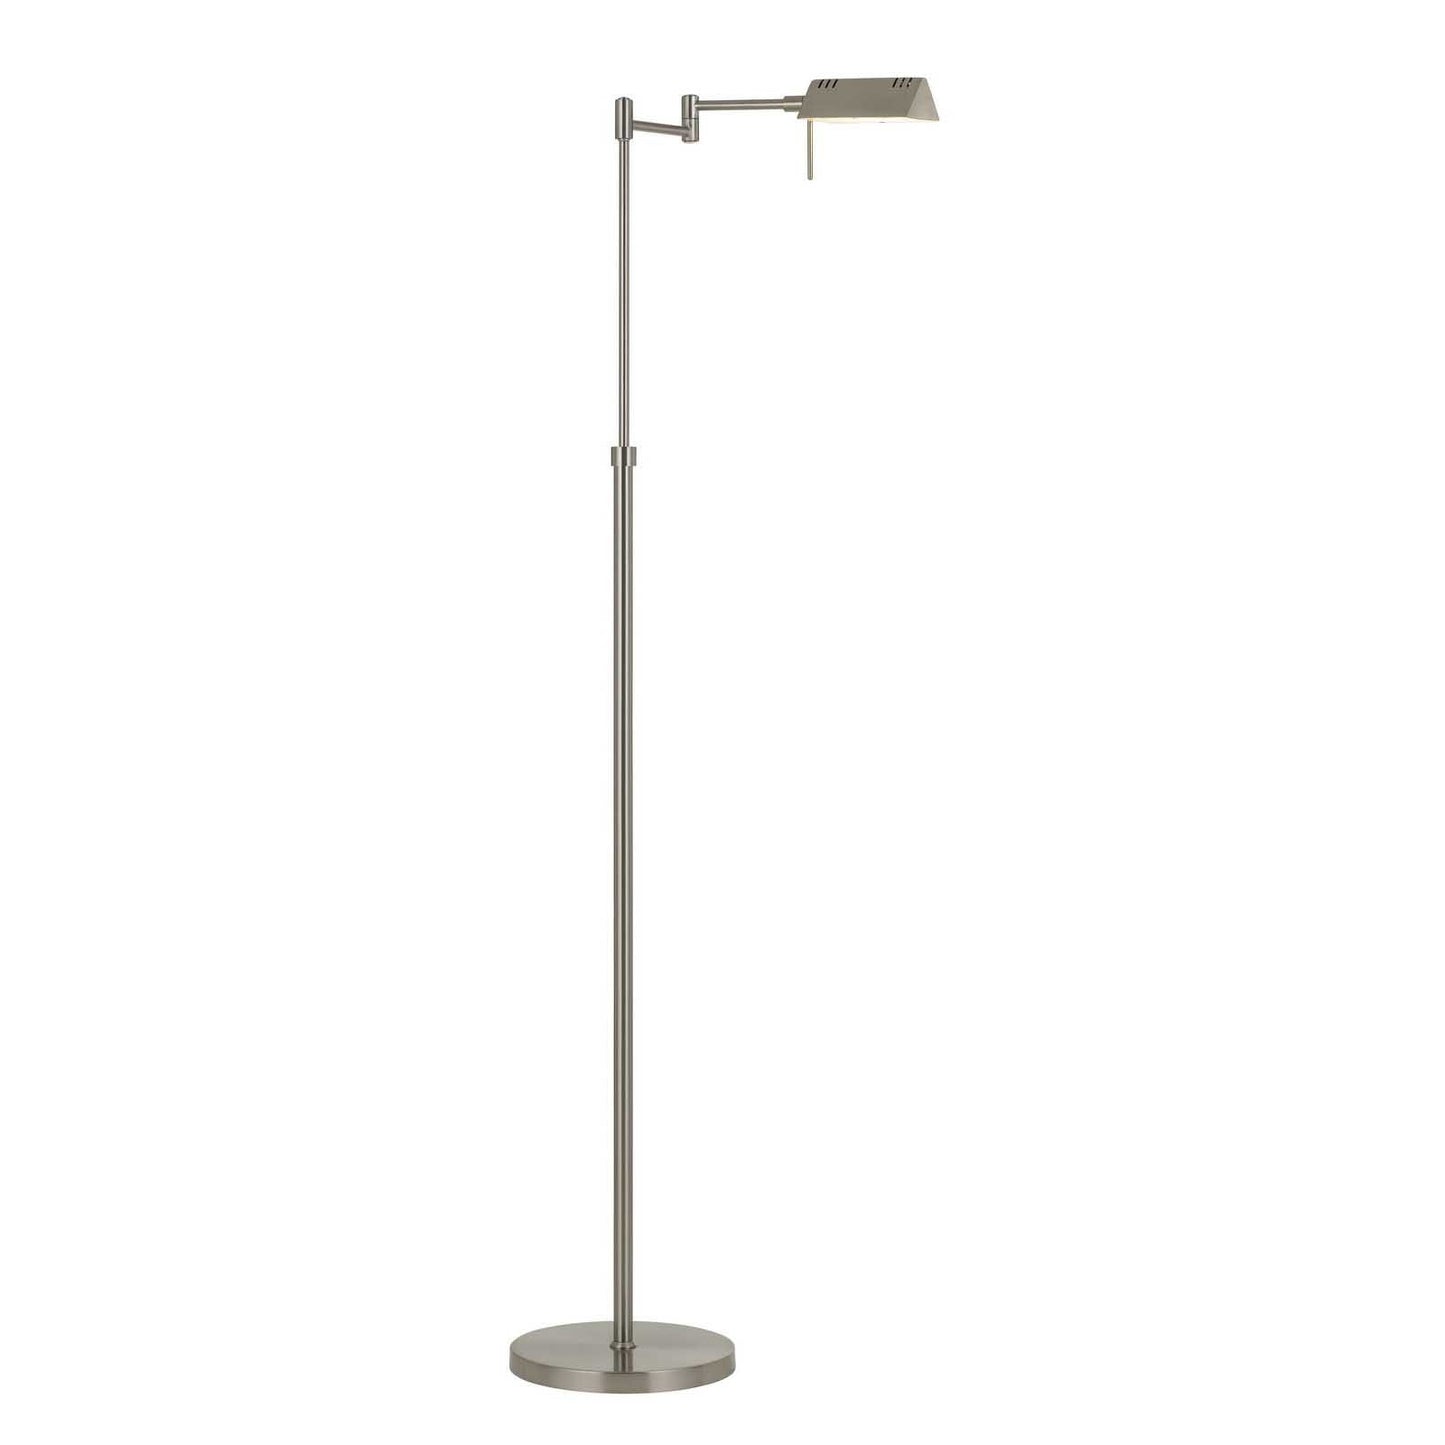 61" Nickel Adjustable Swing Arm Floor Lamp